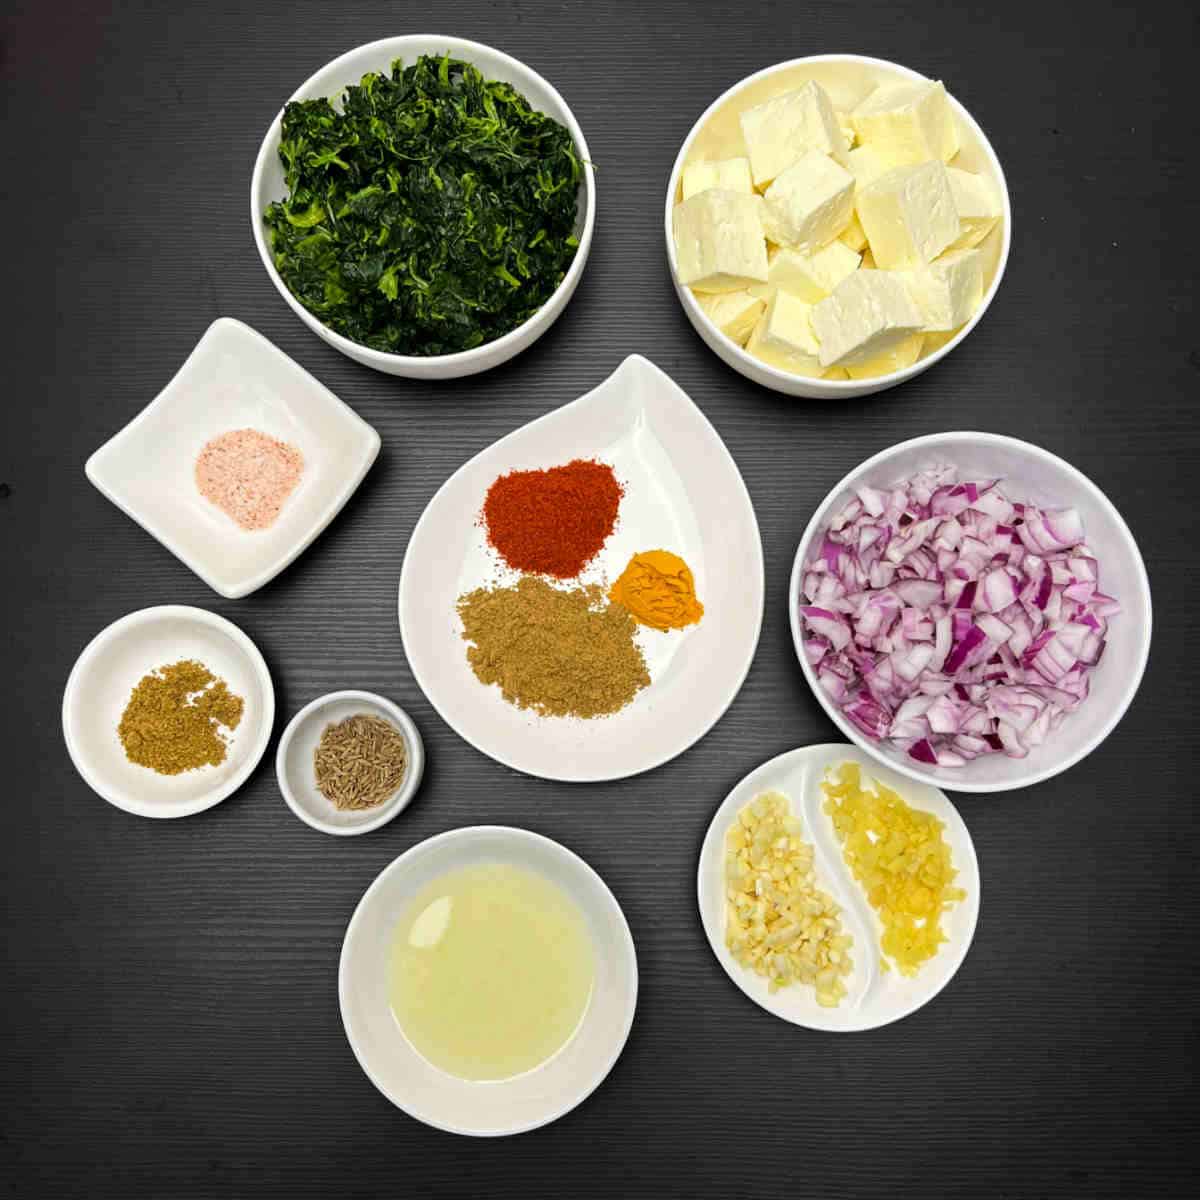 ingredients to make palak paneer stir fry